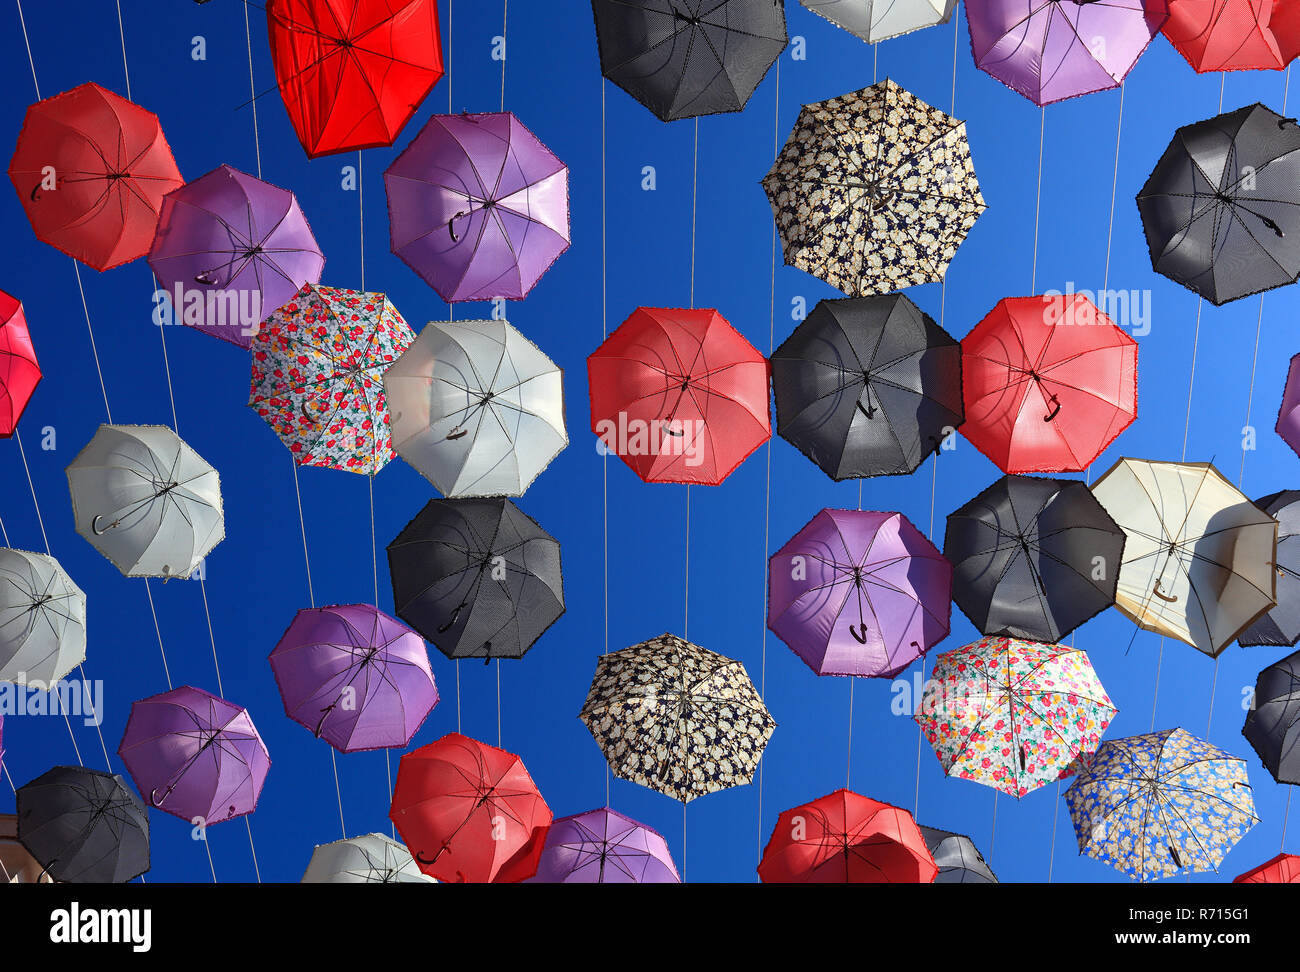 Open umbrellas, parasols as street decoration, Manfredonia, Appulien, Italy Stock Photo